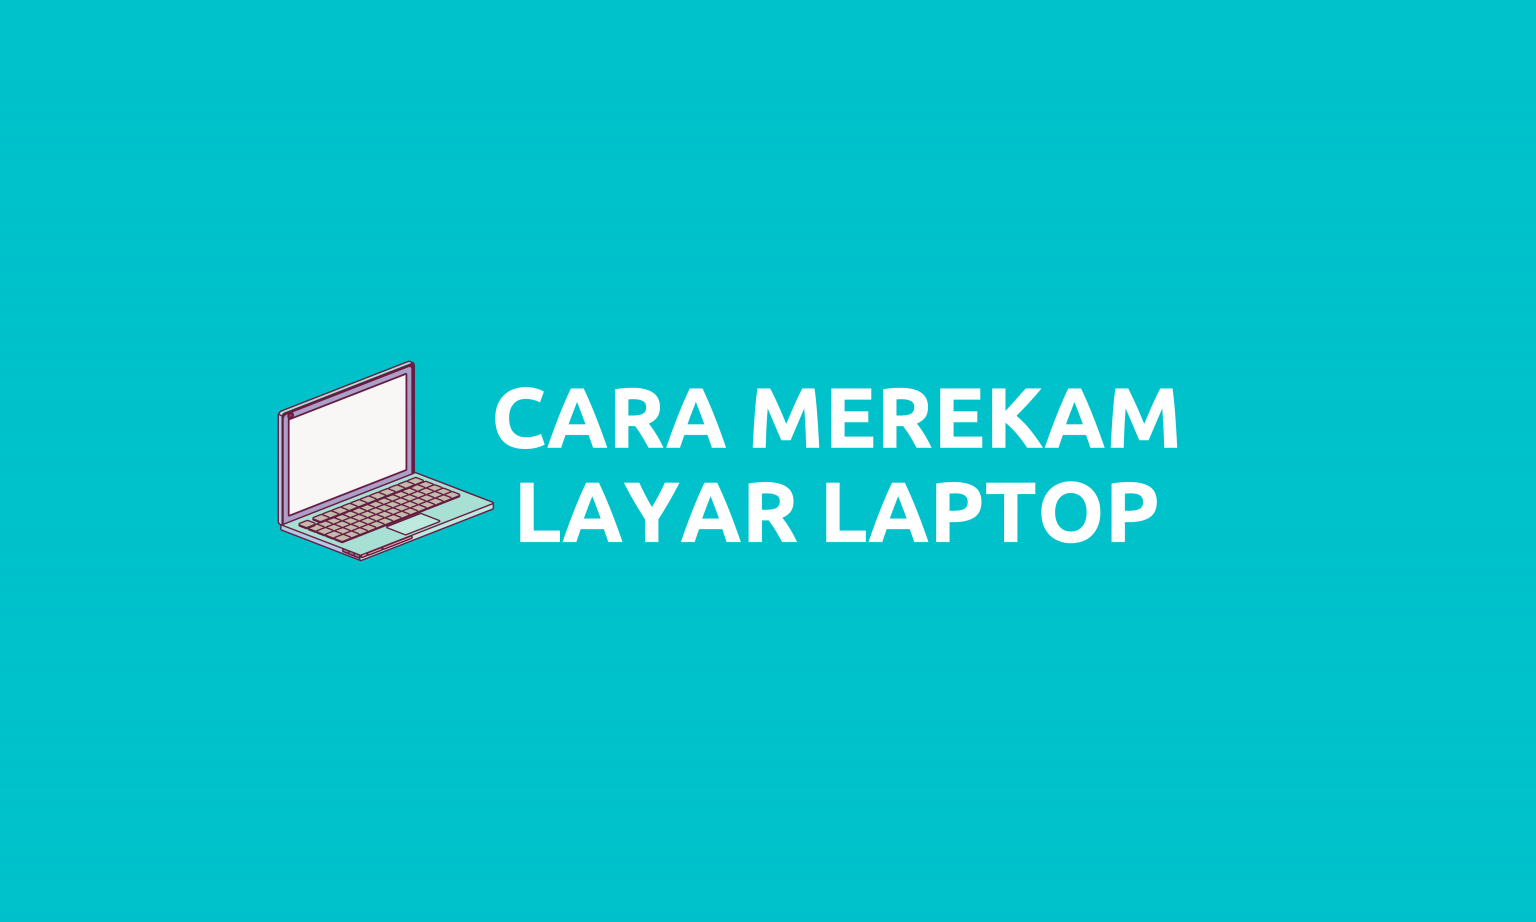 5 Cara Merekam Layar Laptop & PC Tanpa Aplikasi - Batekno.com